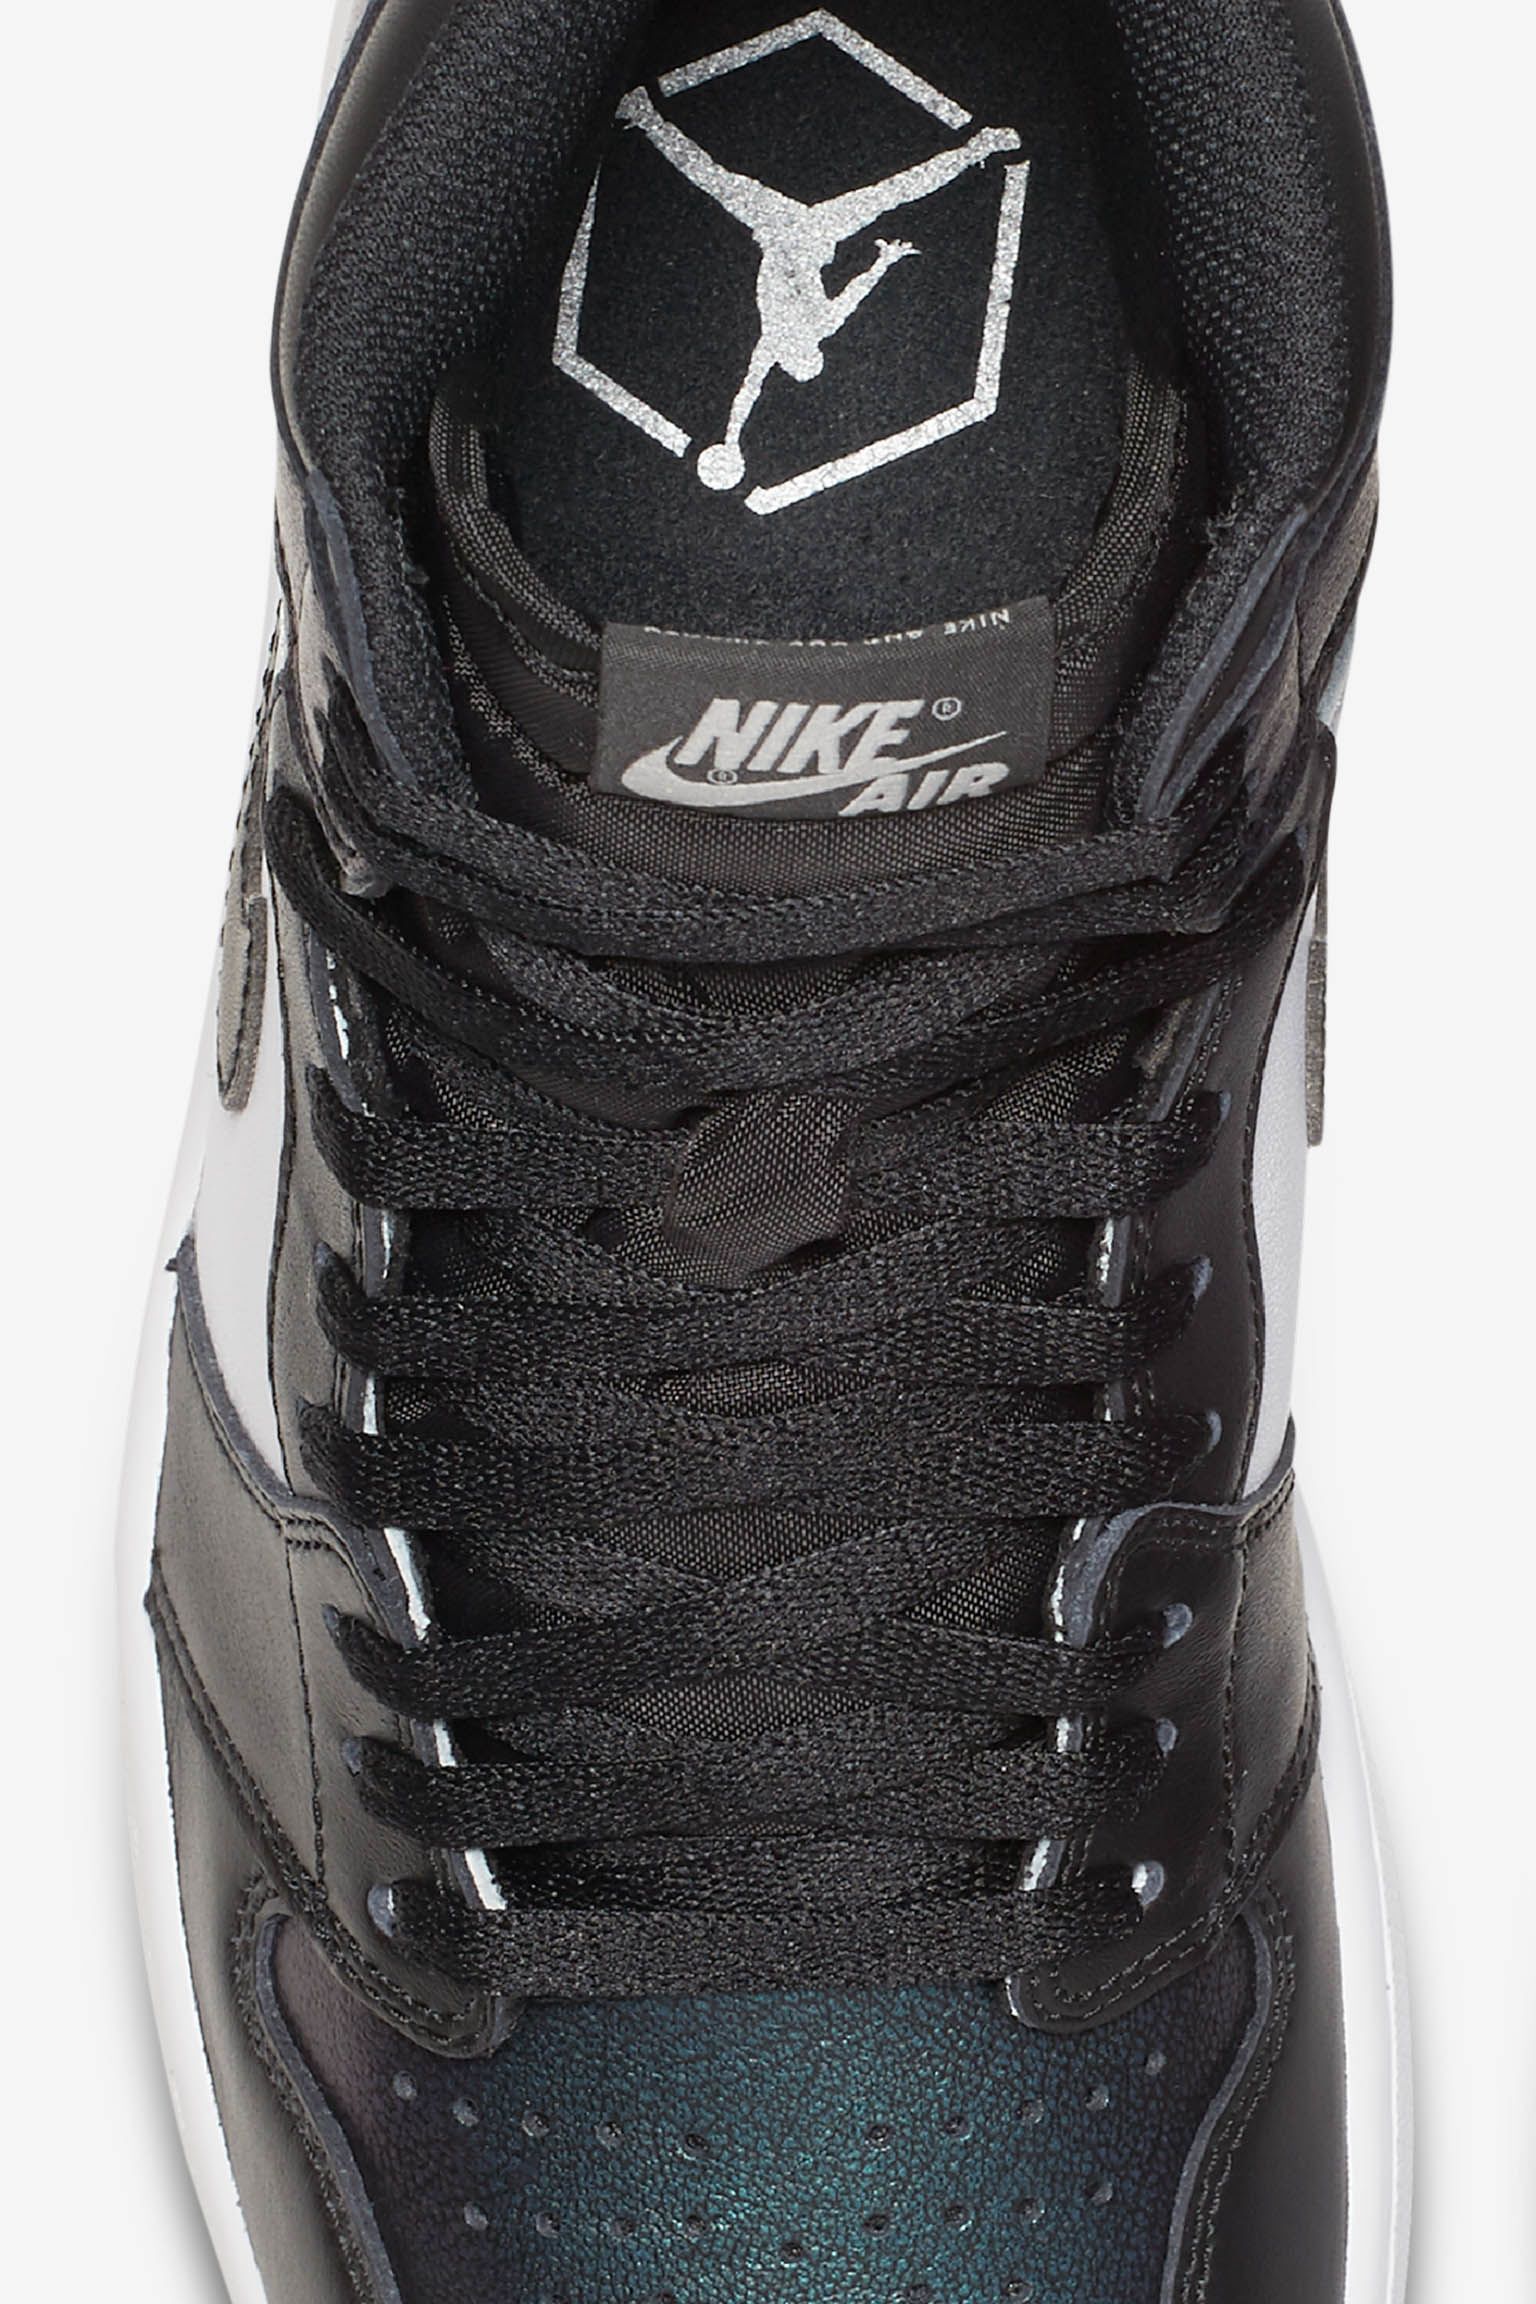 Air Jordan 1 Retro 'Gotta Shine'. Nike SNKRS